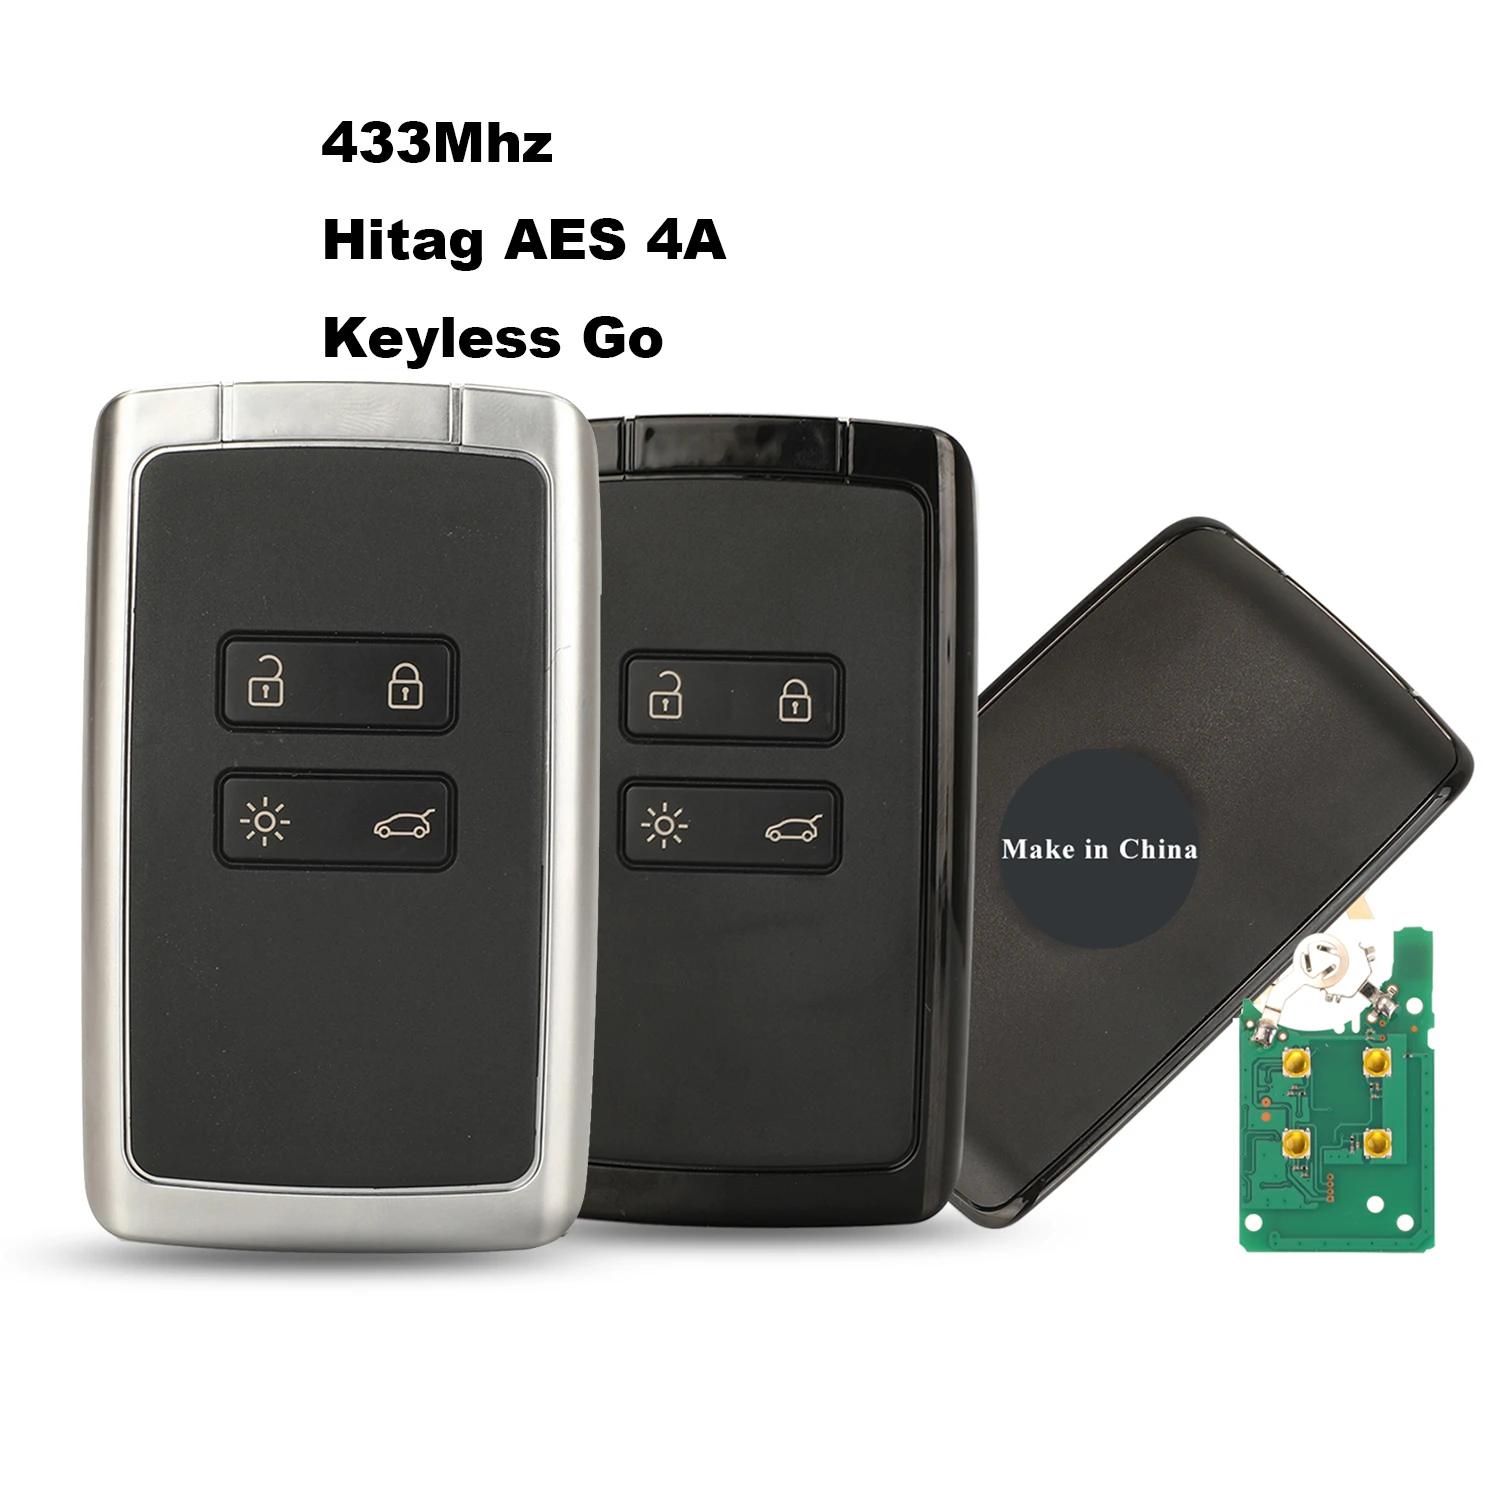 jingyuqin Car Alarm 4 Button Smart Remote Key 434mhz Hitag AES 4A Chip For Renault Megane 4 Keyless Go / Entry Car Key